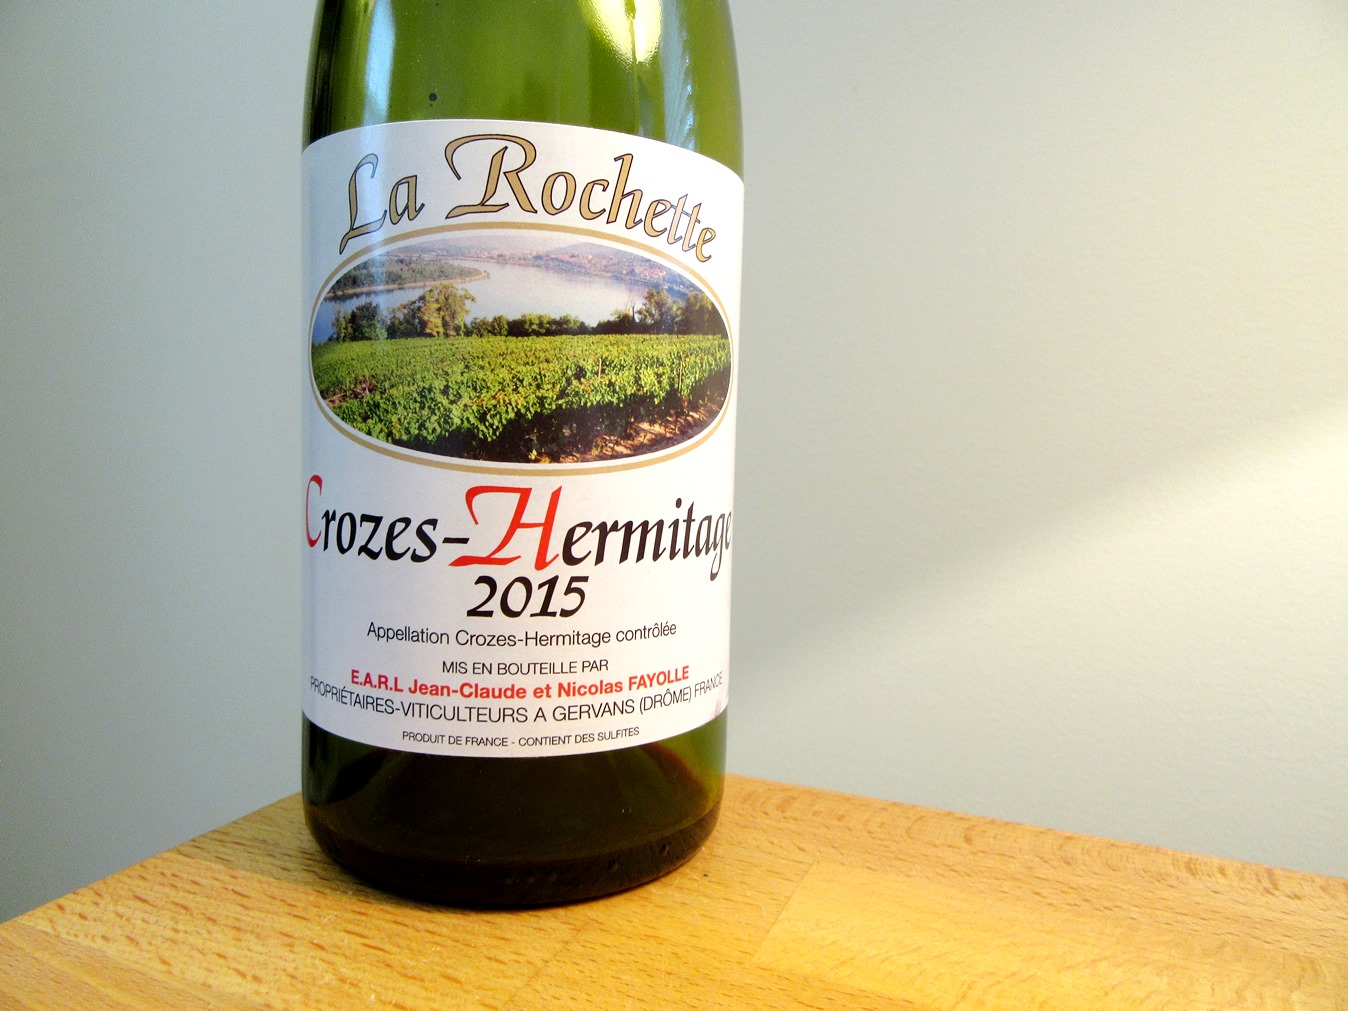 Domaine Jean-Claude et Nicolas Fayolle, La Rochette Crozes-Hermitage 2015, Rhône, France, Wine Casual